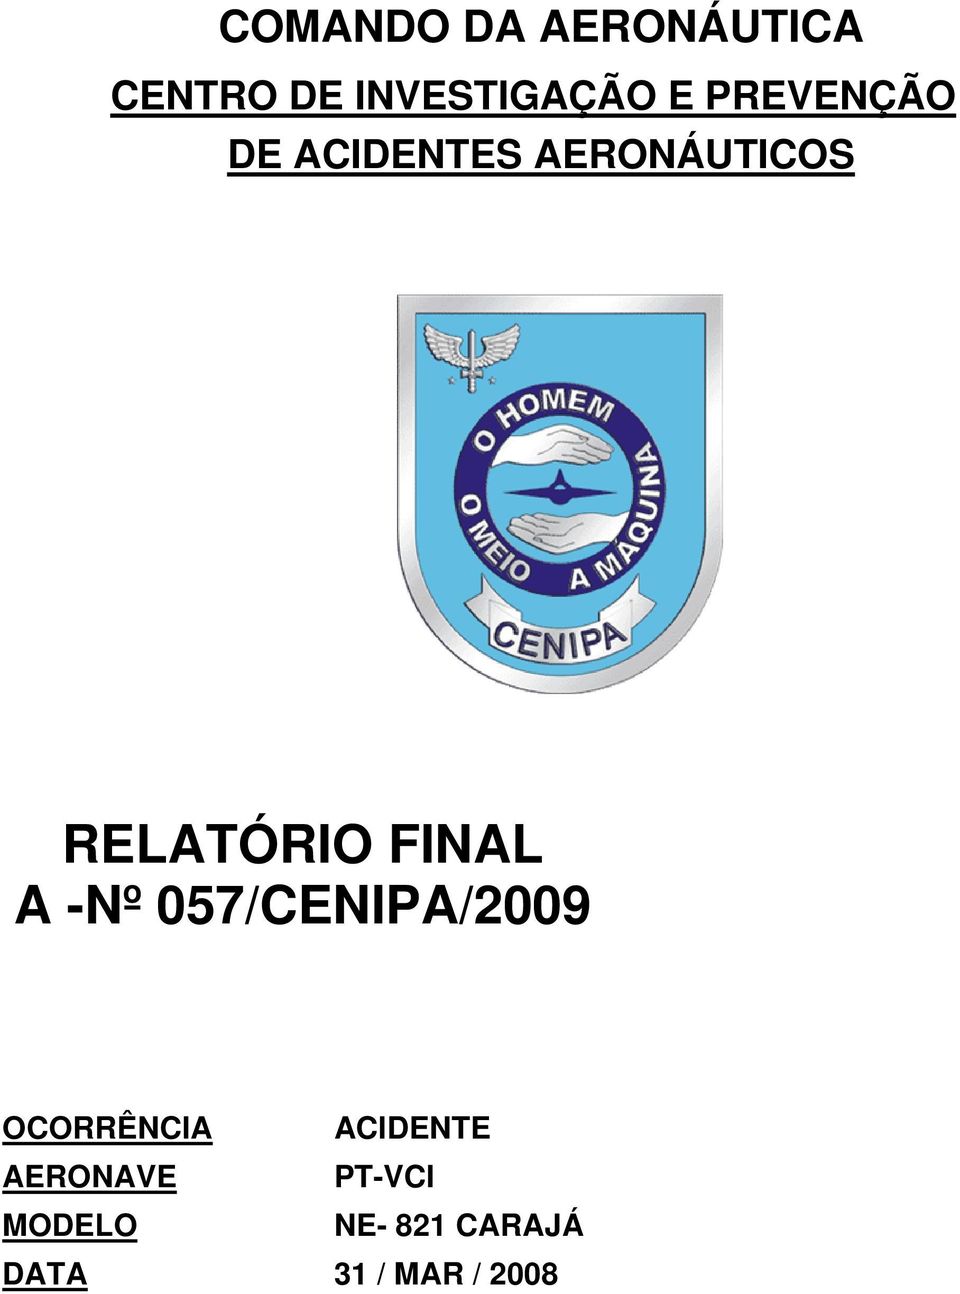 FINAL A -Nº 057/CENIPA/2009 OCORRÊNCIA ACIDENTE